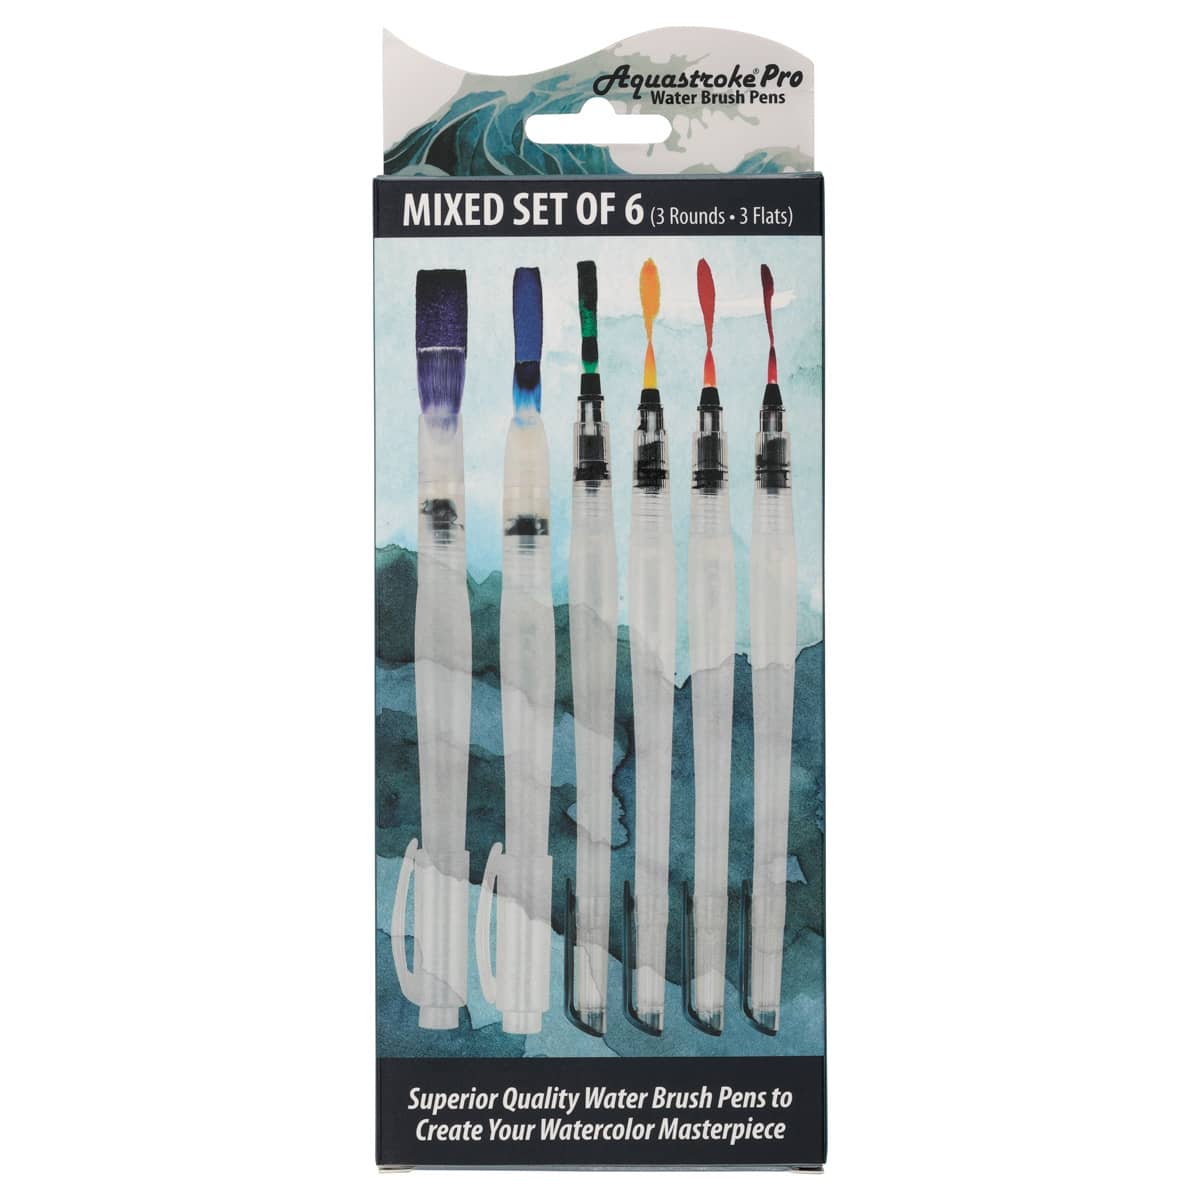 Aquastroke Pro Water Brush Pens Mixed Set of 6